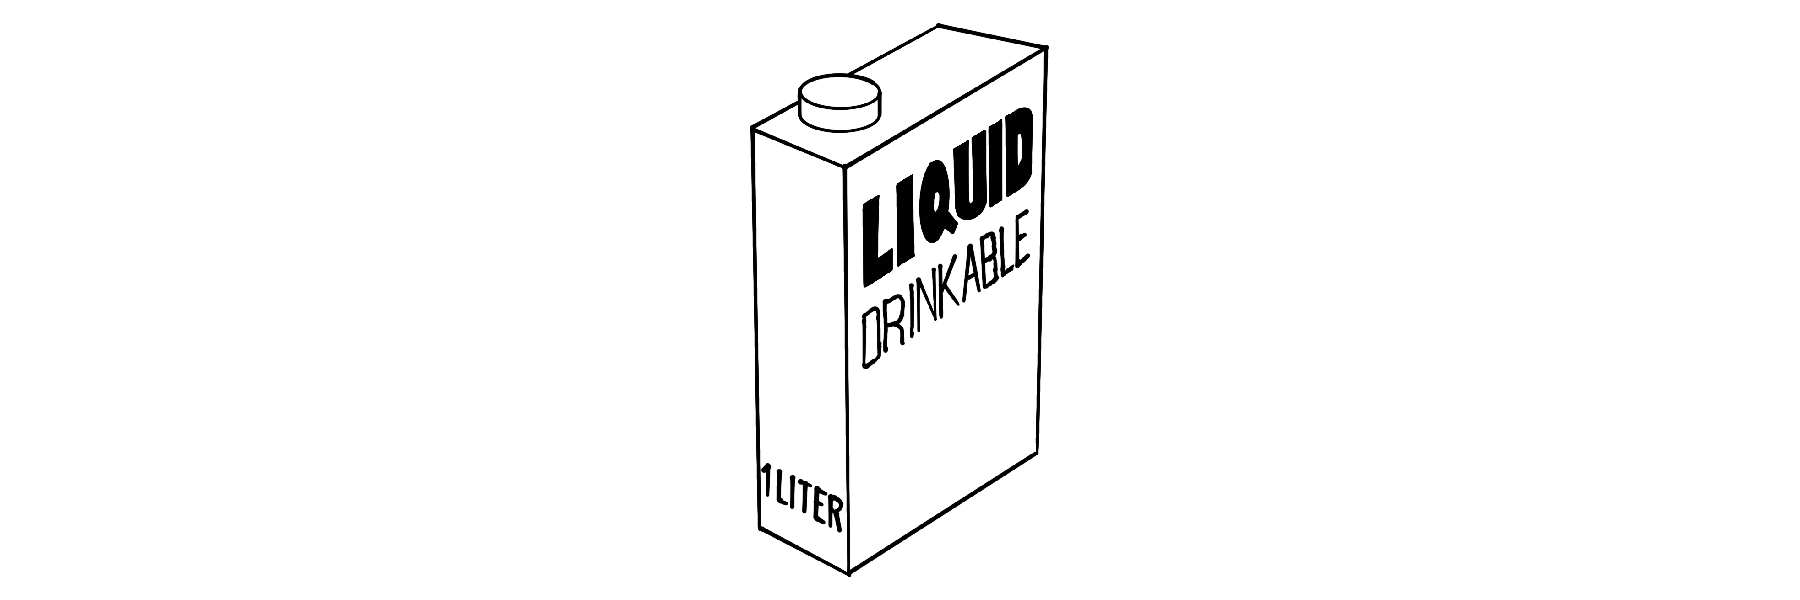 A generic “drinkable liquid” carton.